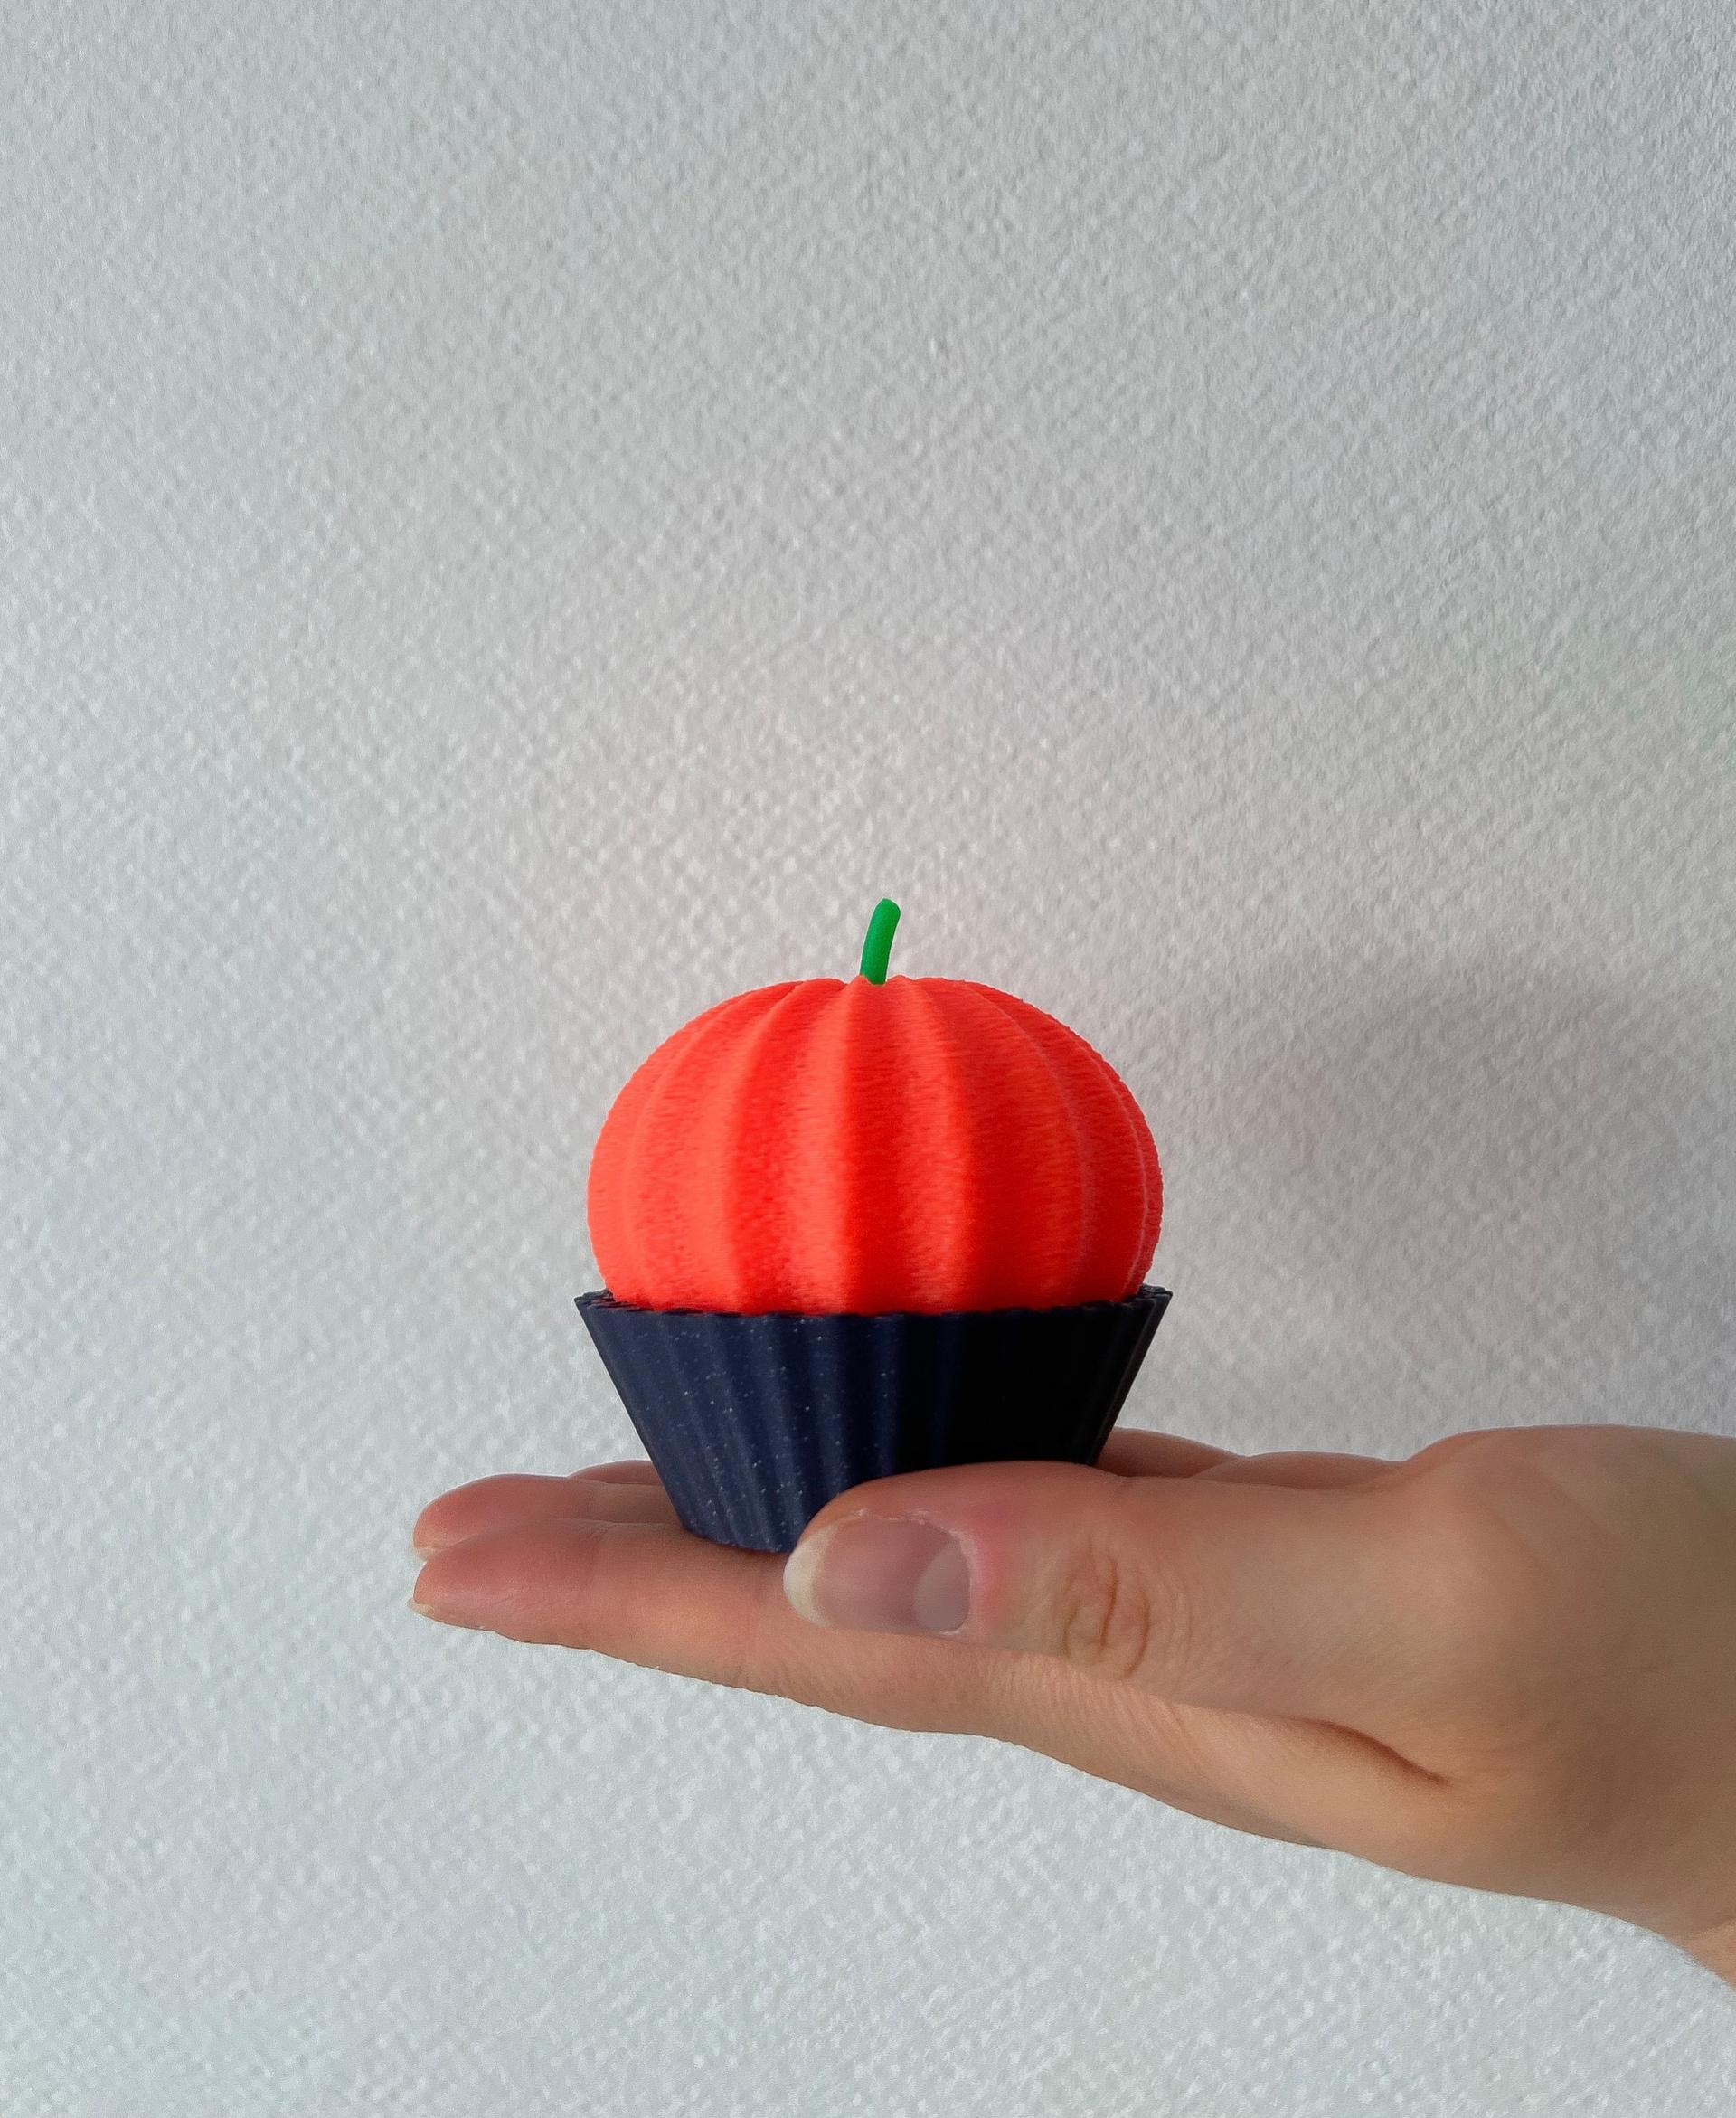 Pumpkin cupcake - Yummy cupcake pumpkin!
Fillamentum filament. - 3d model